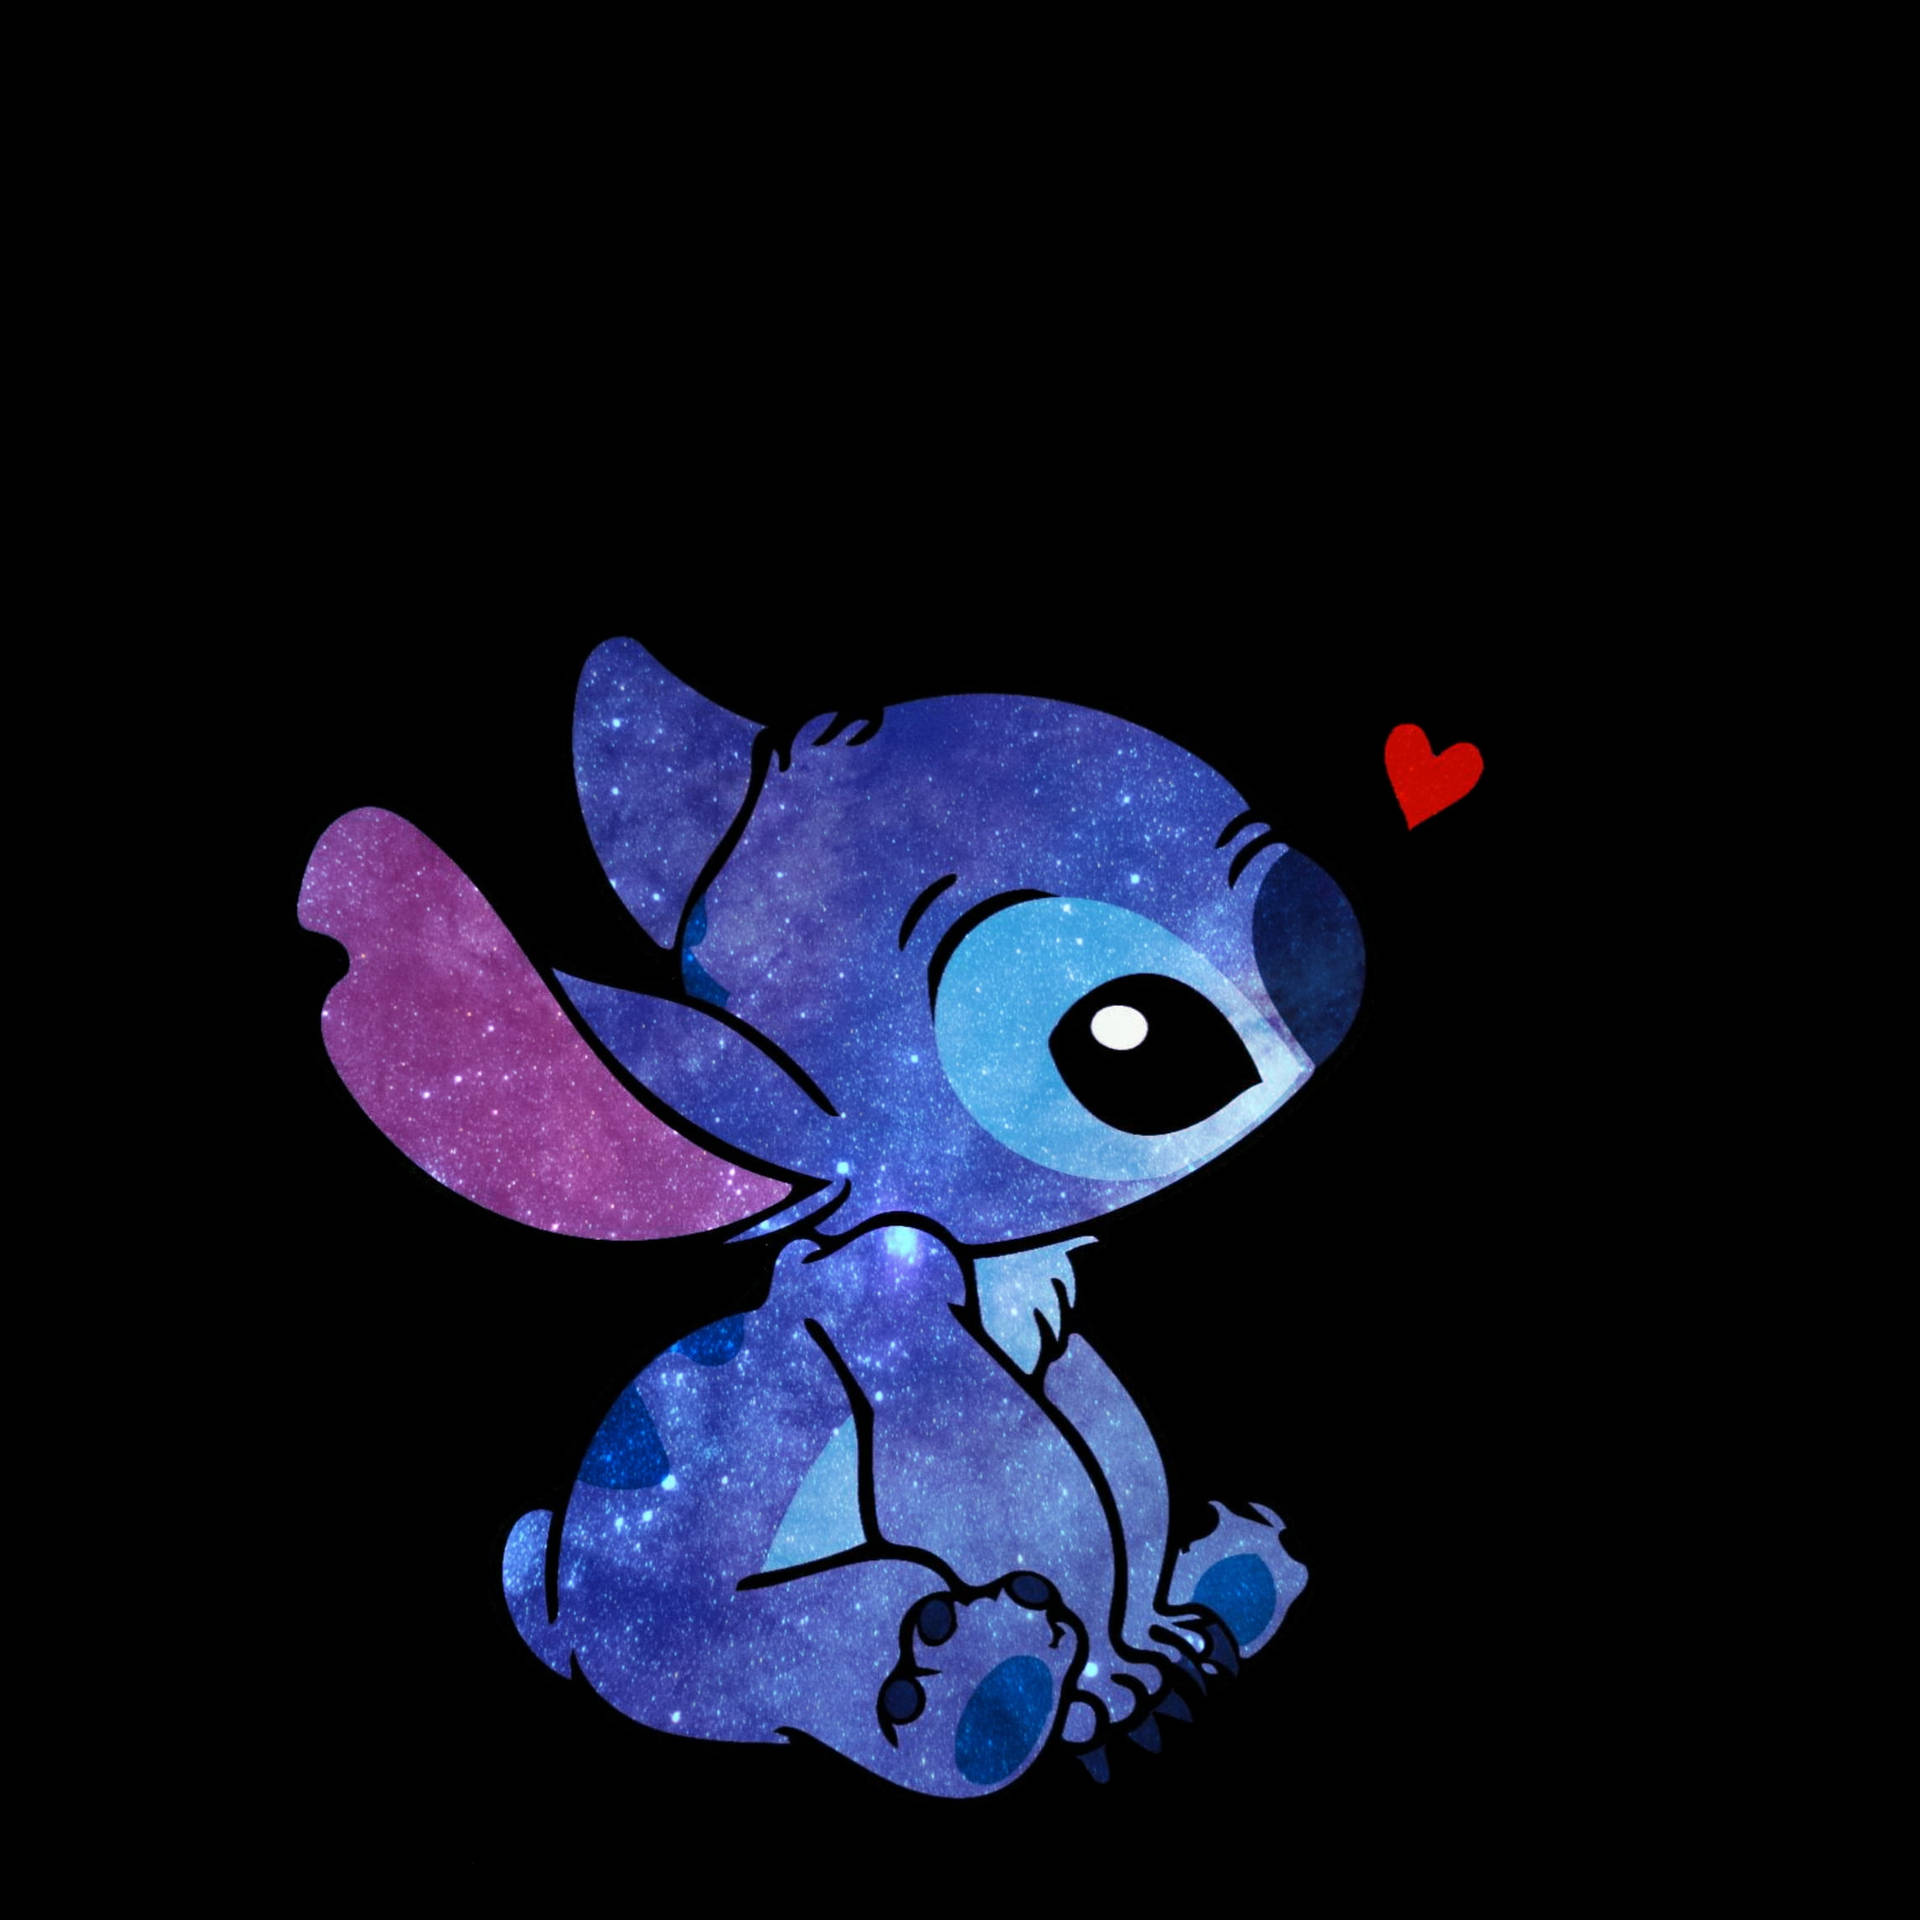 100+] Cute Disney Stitch Wallpapers